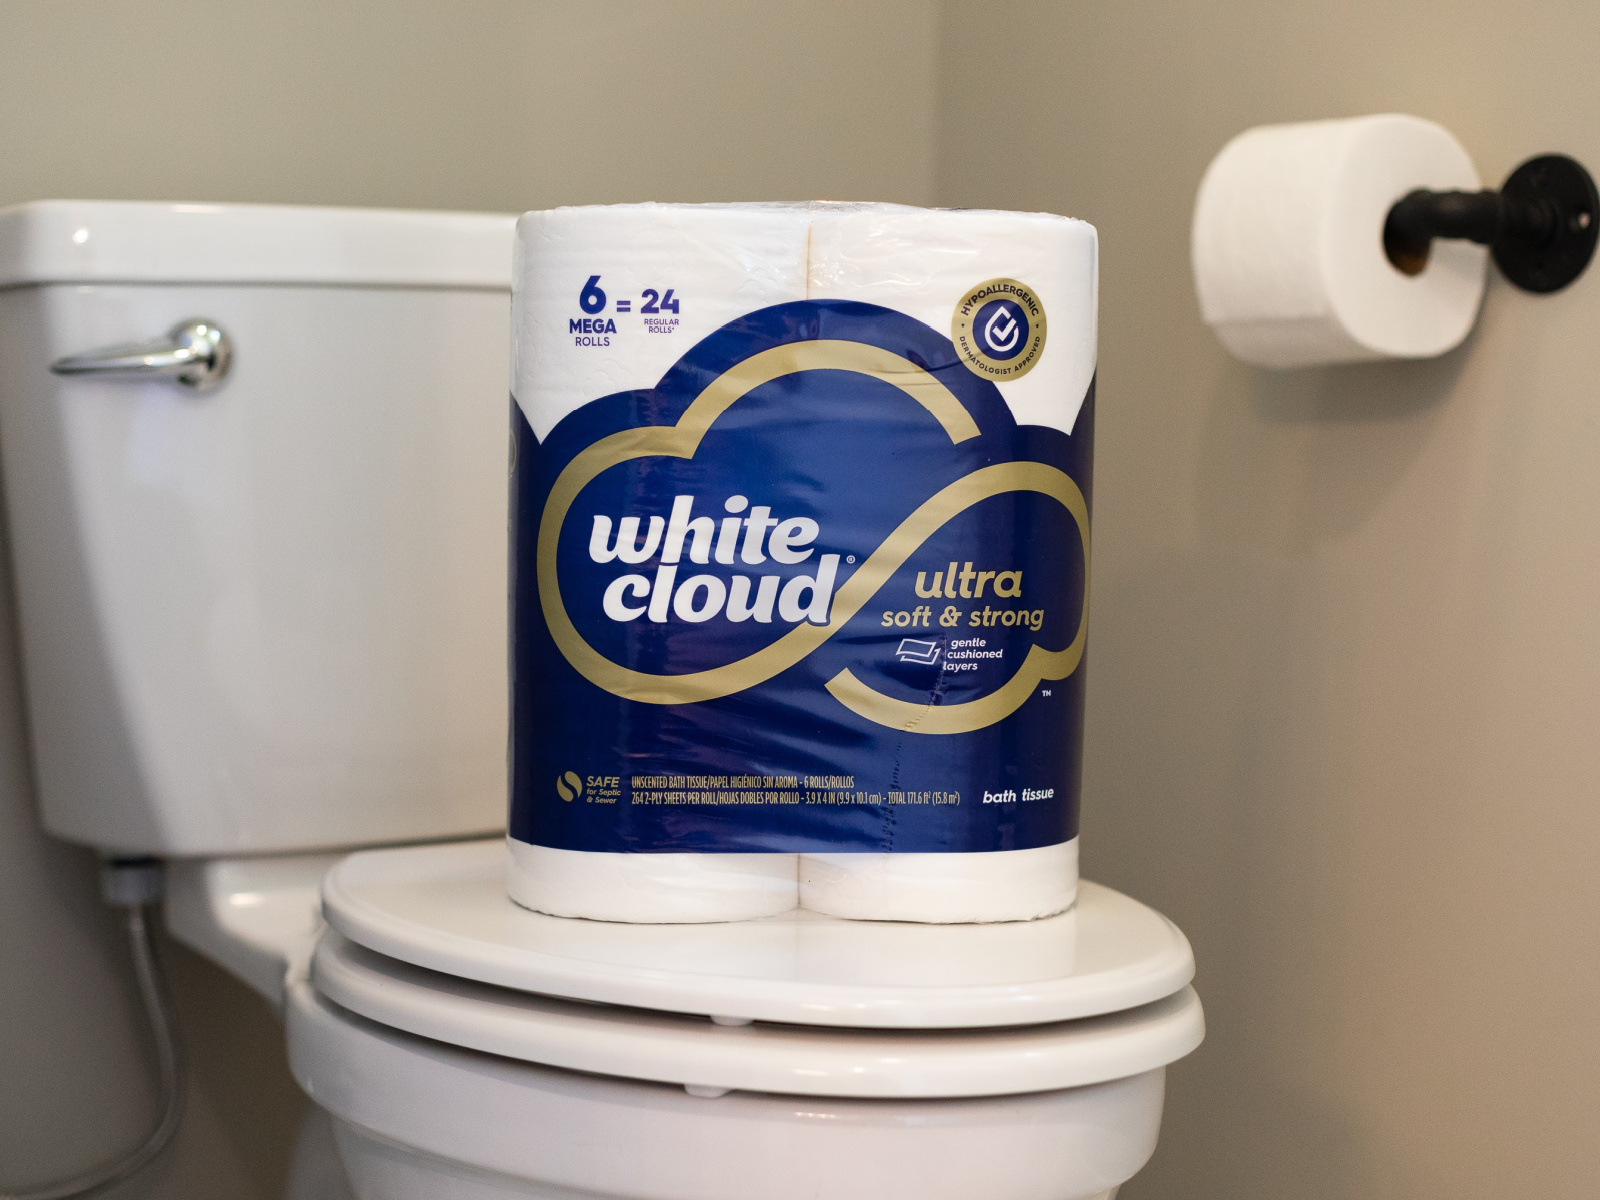 White Cloud Ultra Soft & Strong Bath Tissue As Low As $3.99 At Publix – Plus Cheap Paper Towels